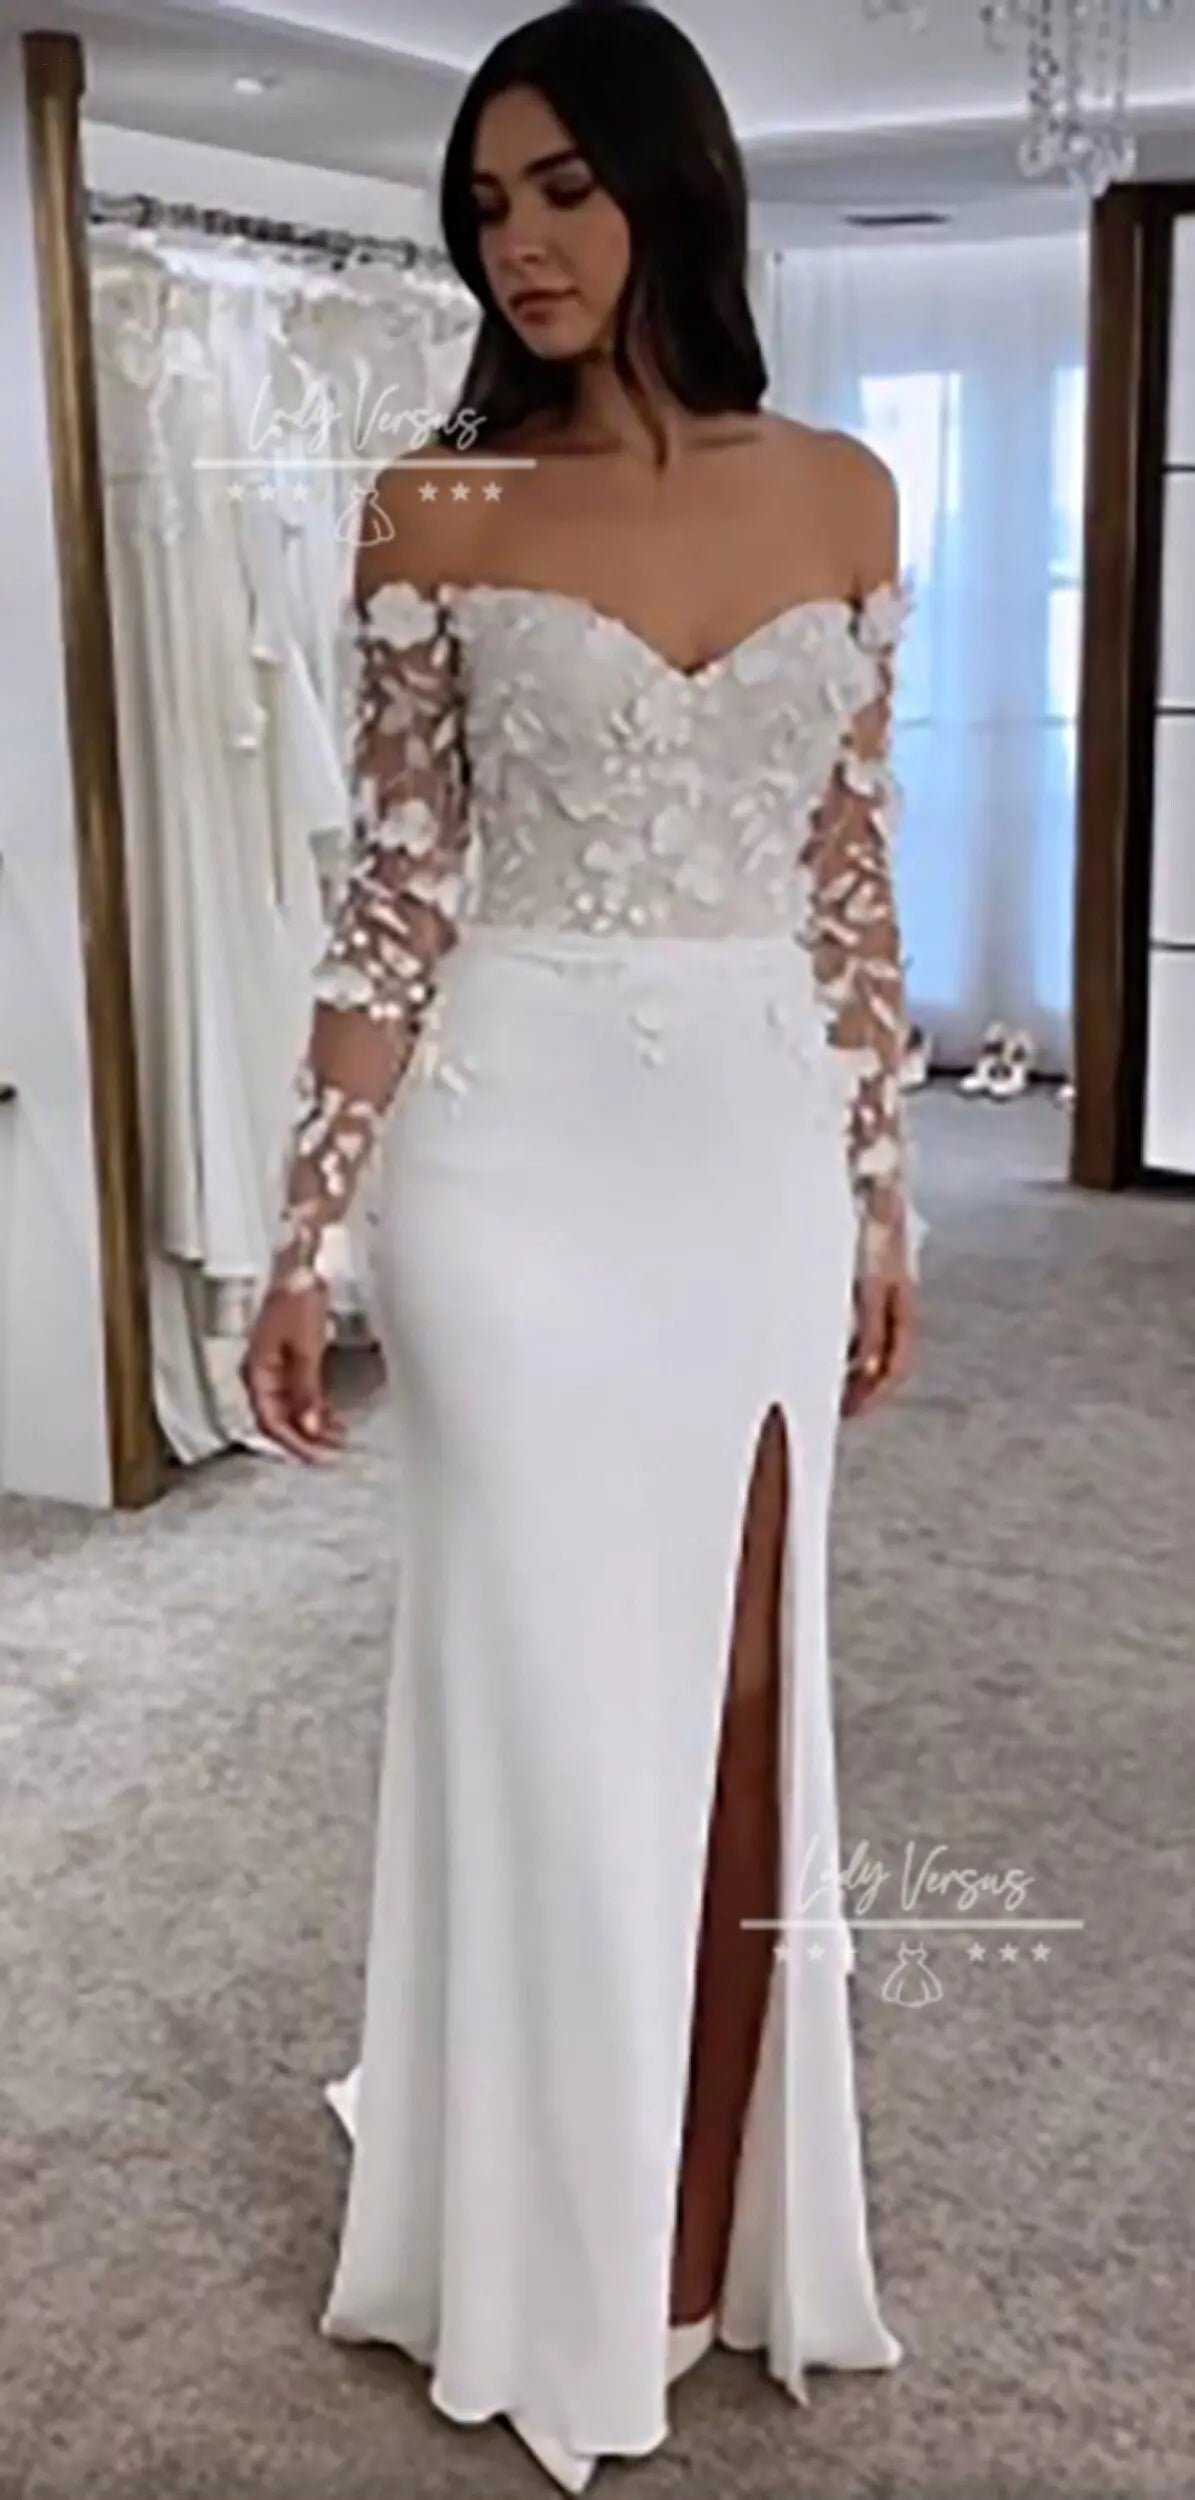 Boho Wedding Dress/ Bohemian Wedding Dress/ Beach Wedding Dress / Elegant  Lace bohemian wedding dress train skirt